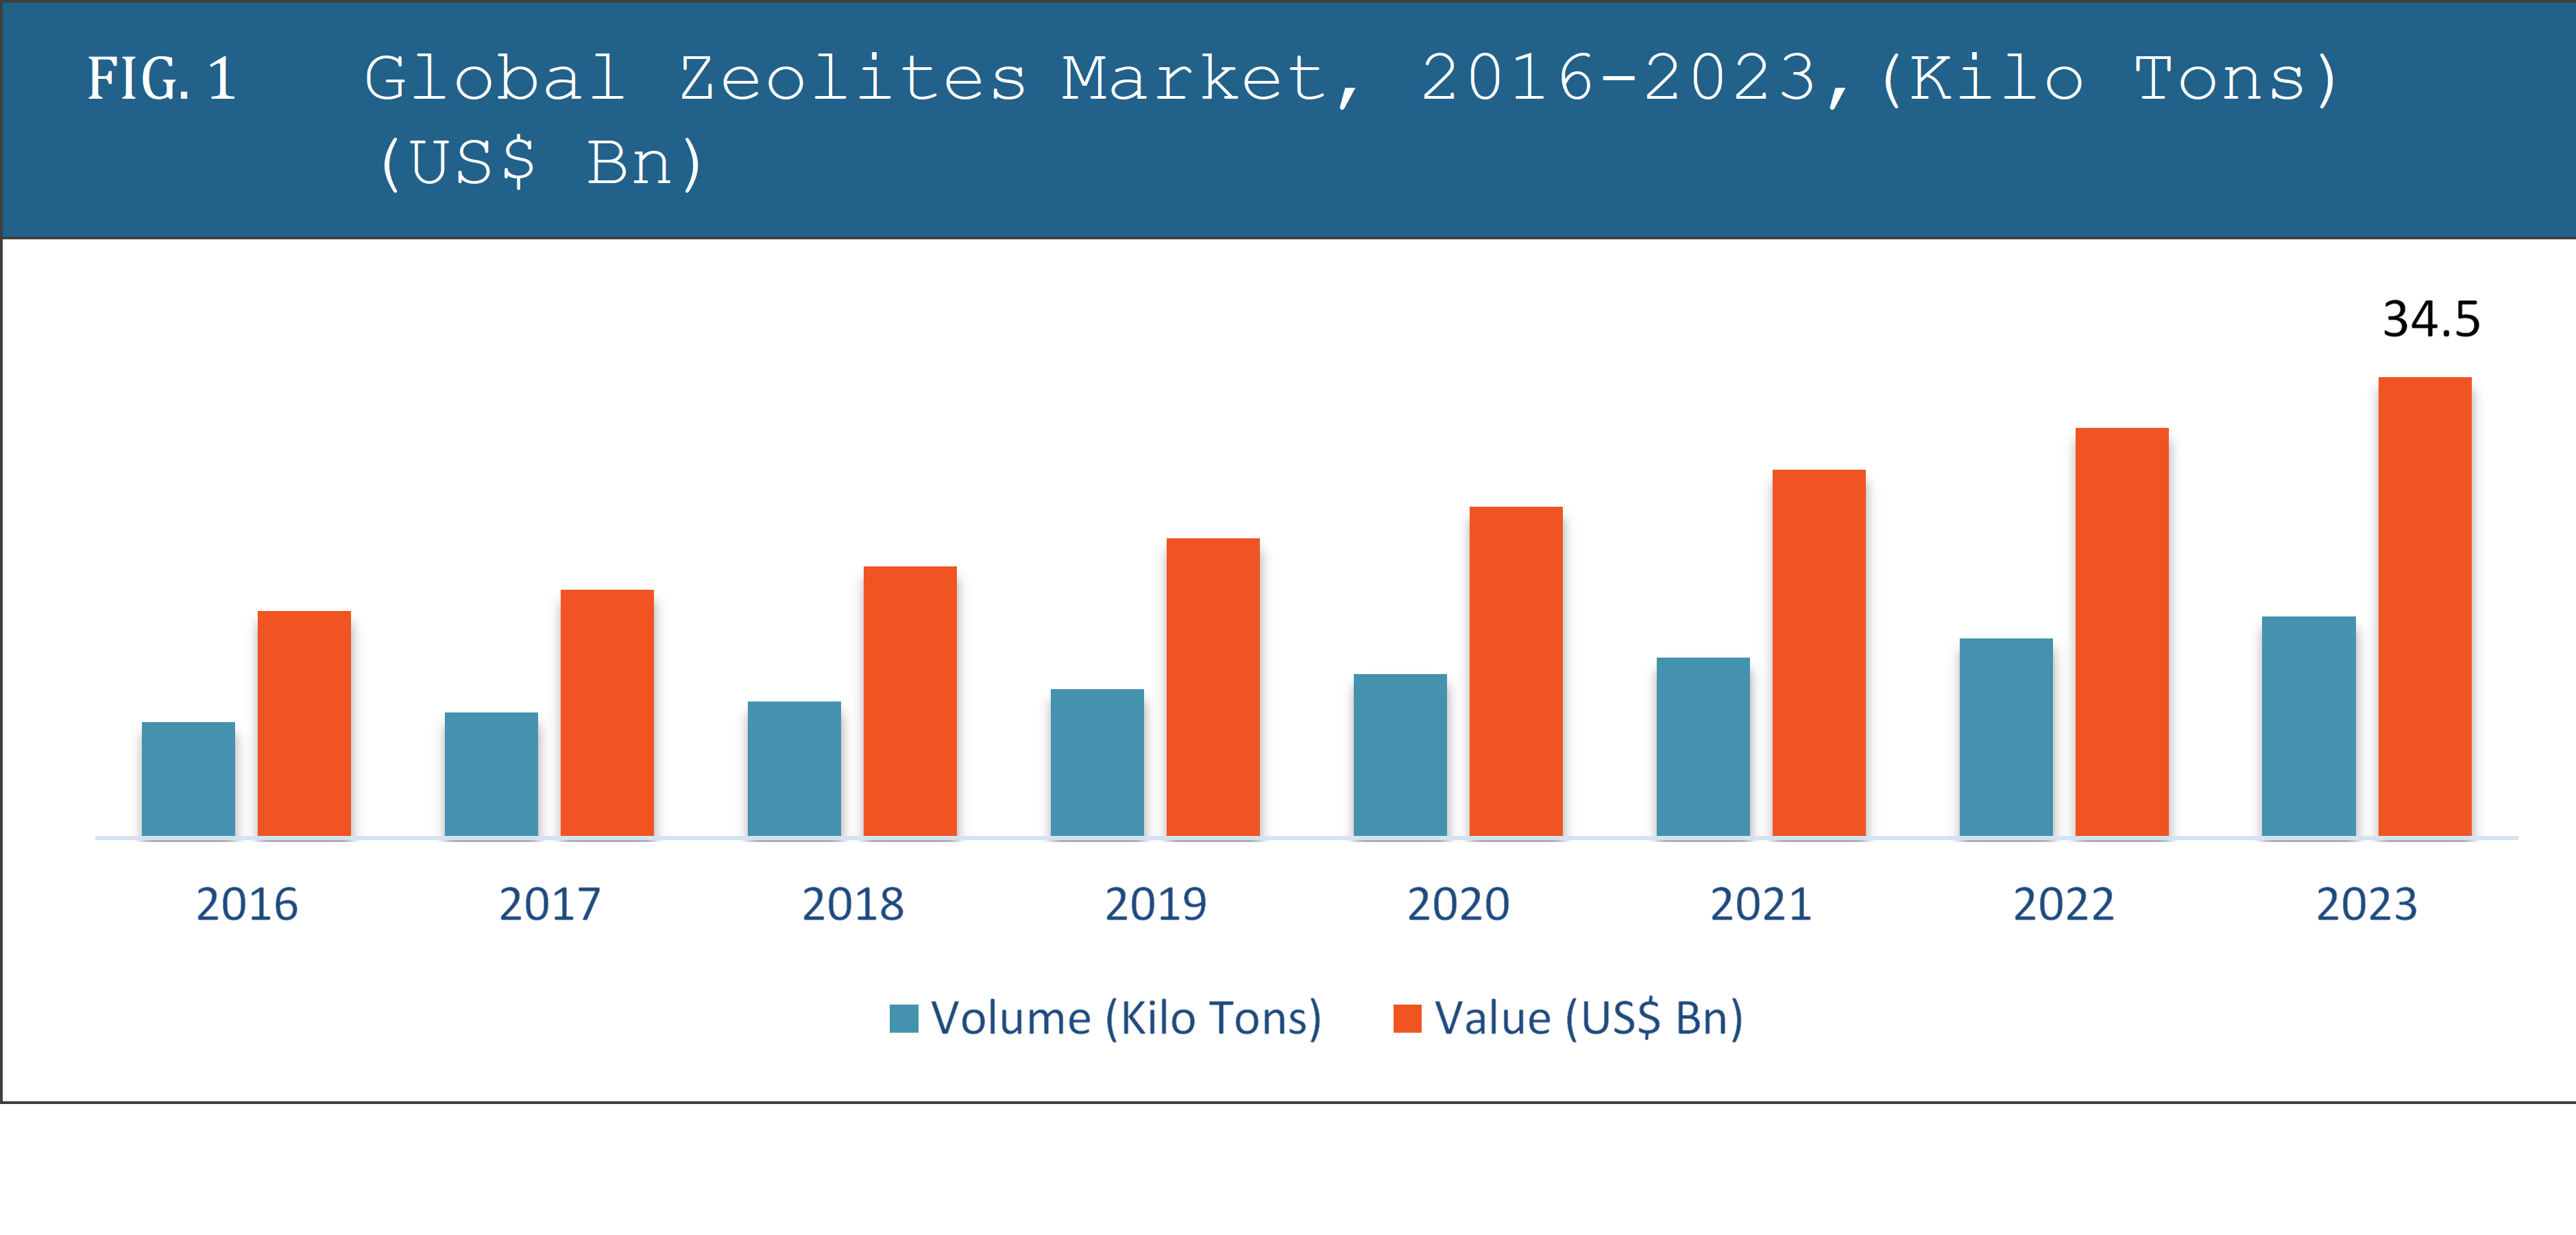 Global Zeolites Market